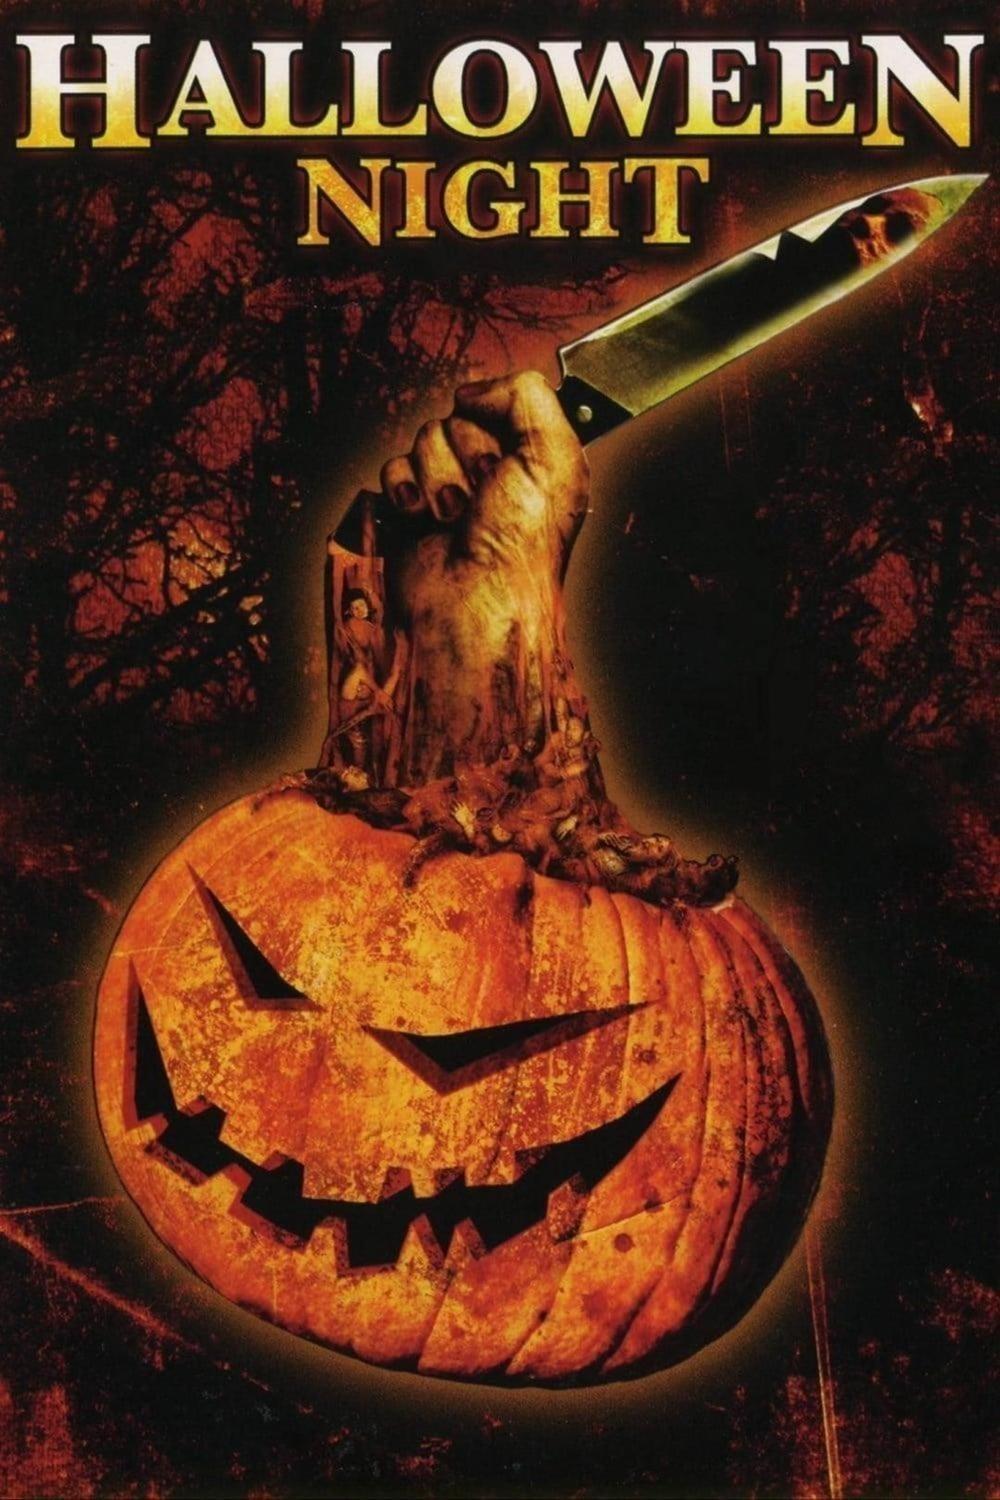 Halloween Night poster